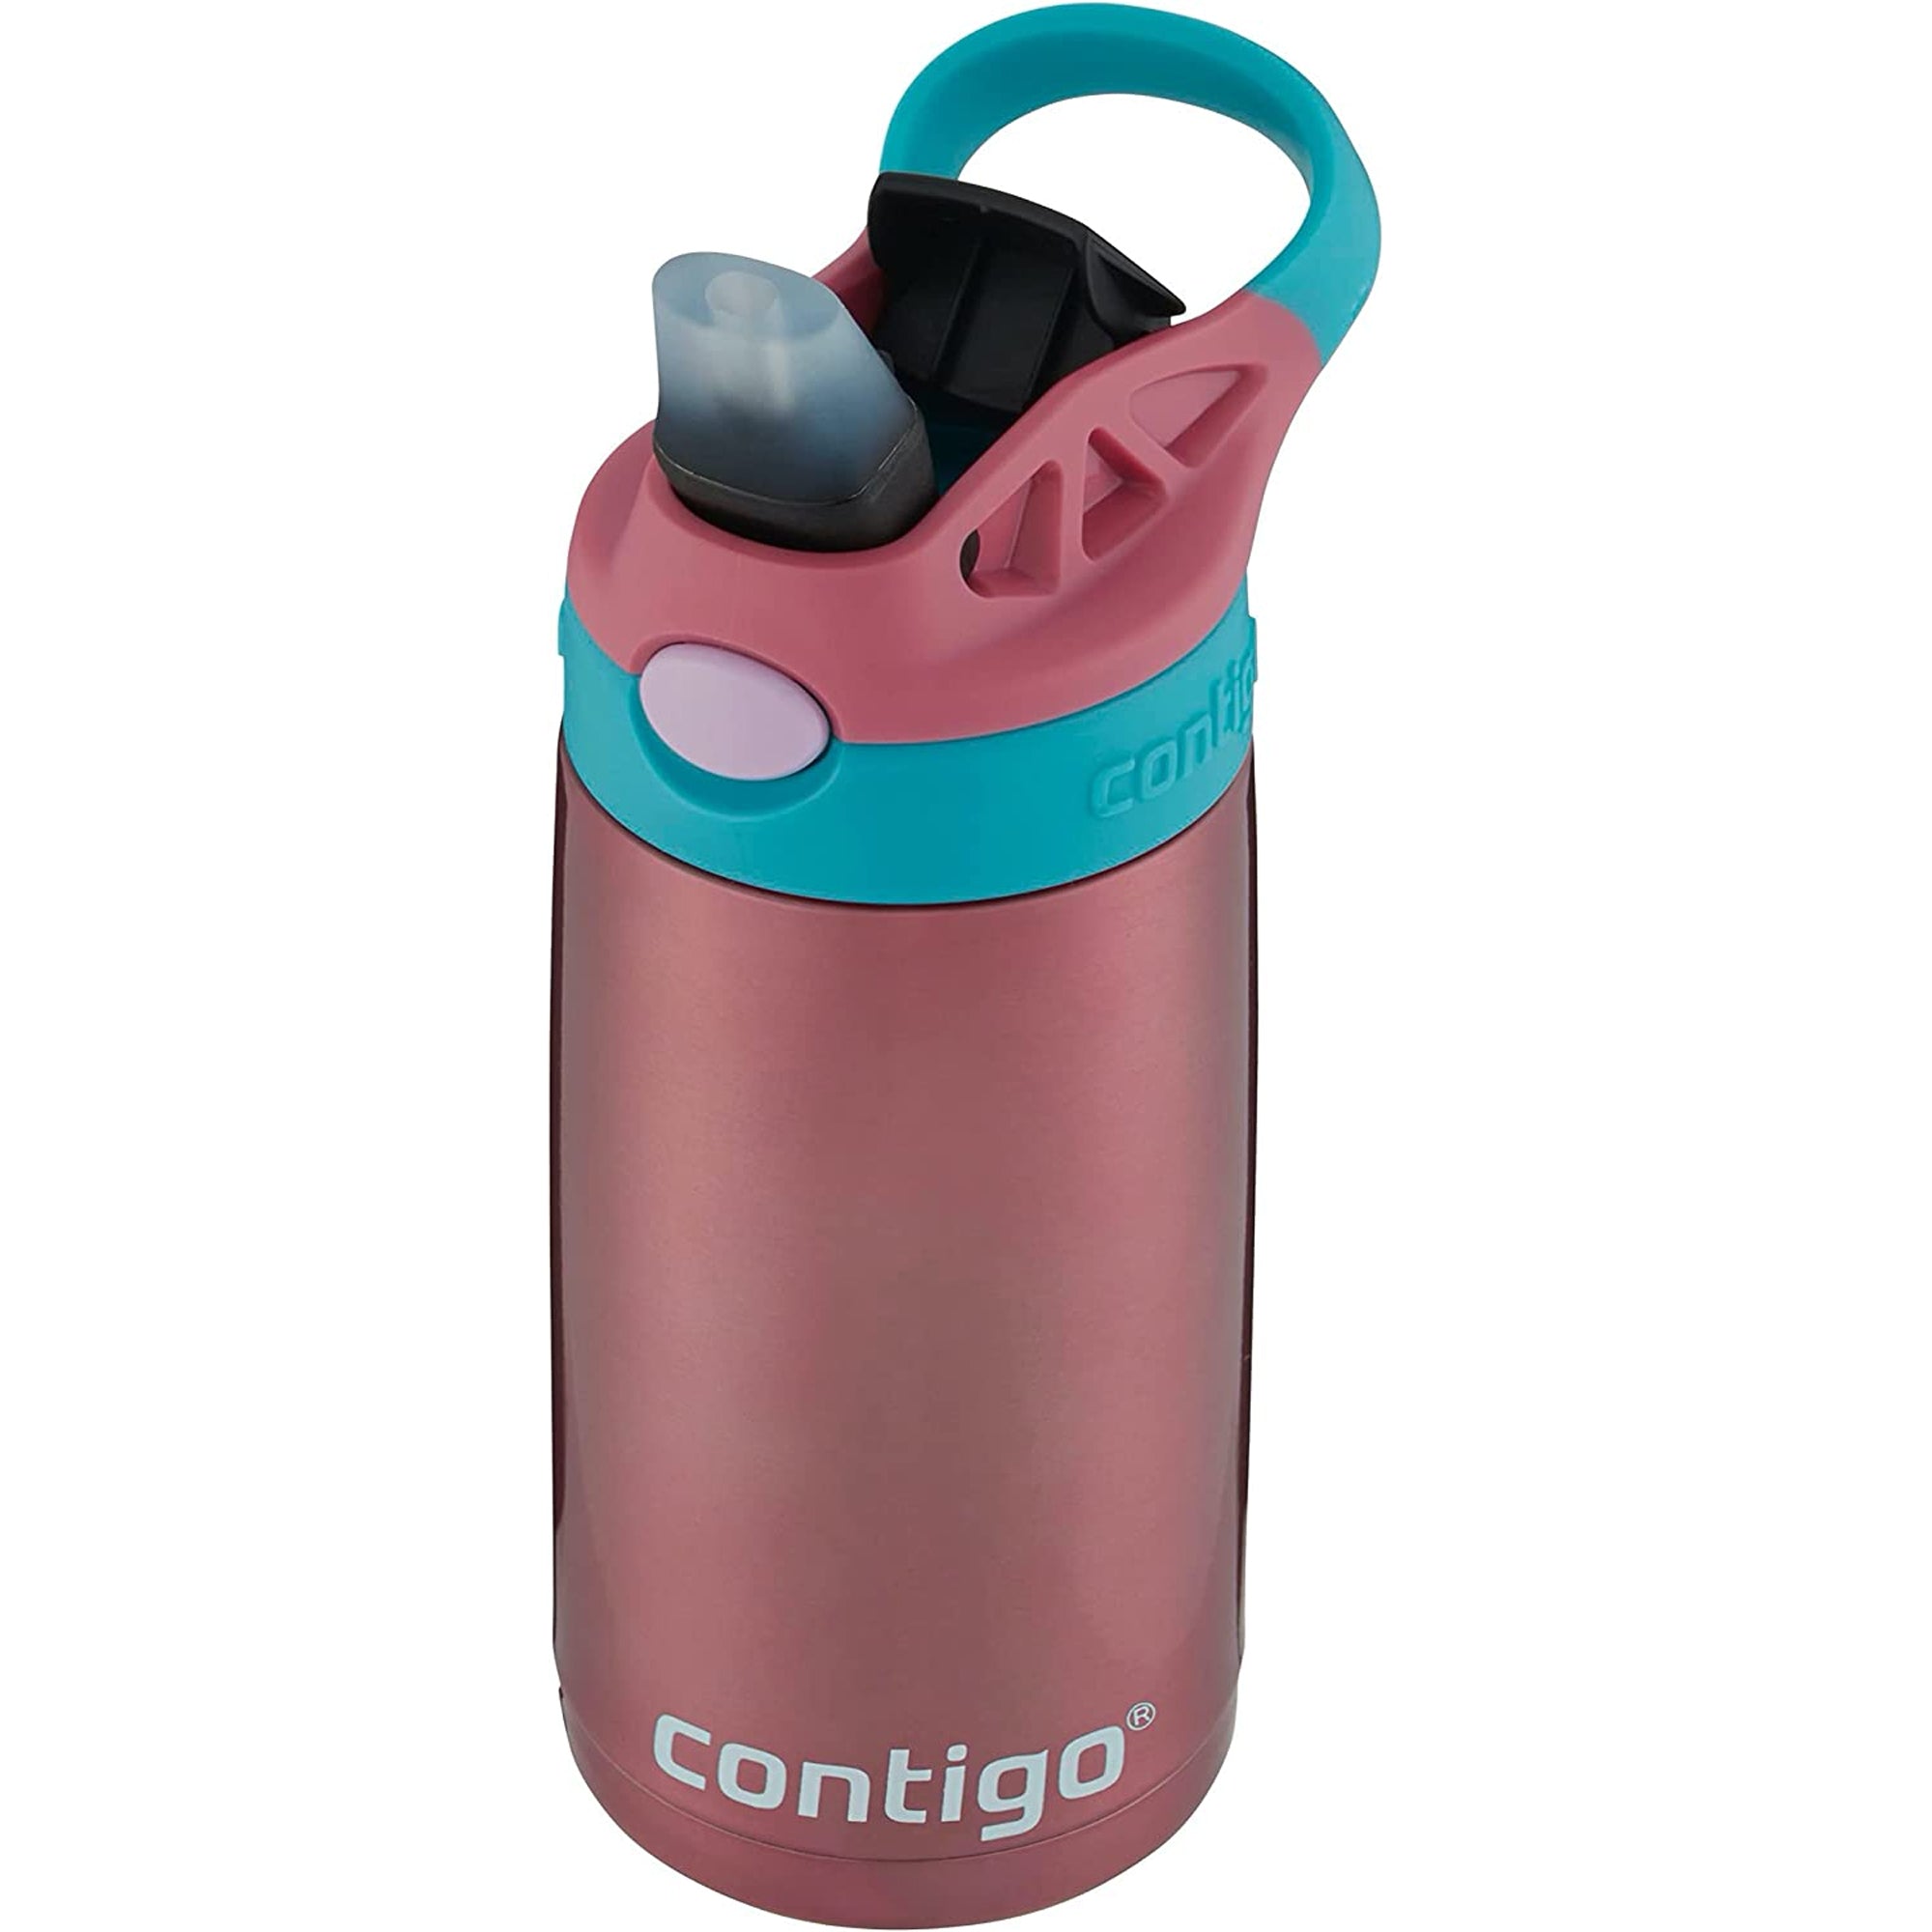 Contigo Kid's 13 oz. Aubrey Vacuum Insulated Stainless Steel Water Bottle- Punch Contigo